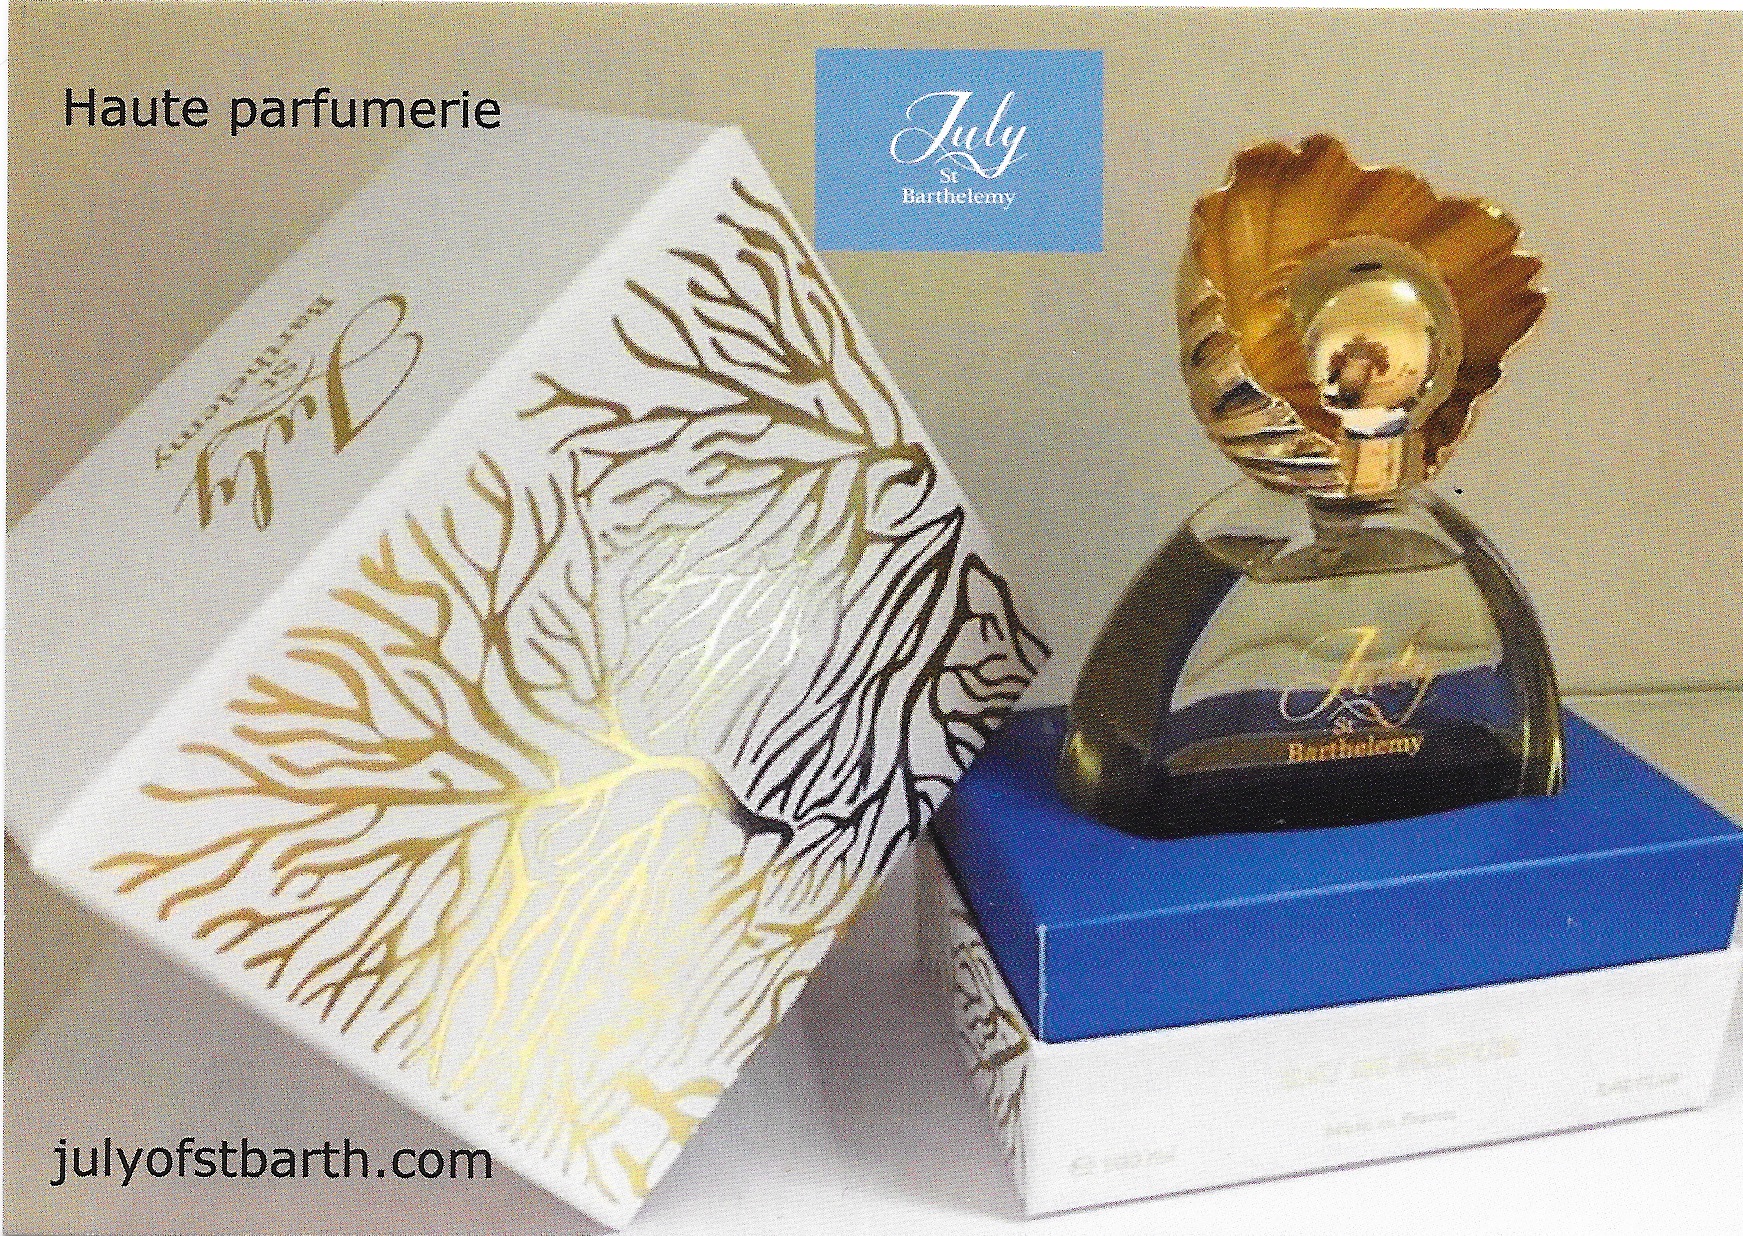 July St Barthelemy Haute parfumerie France perfumed card